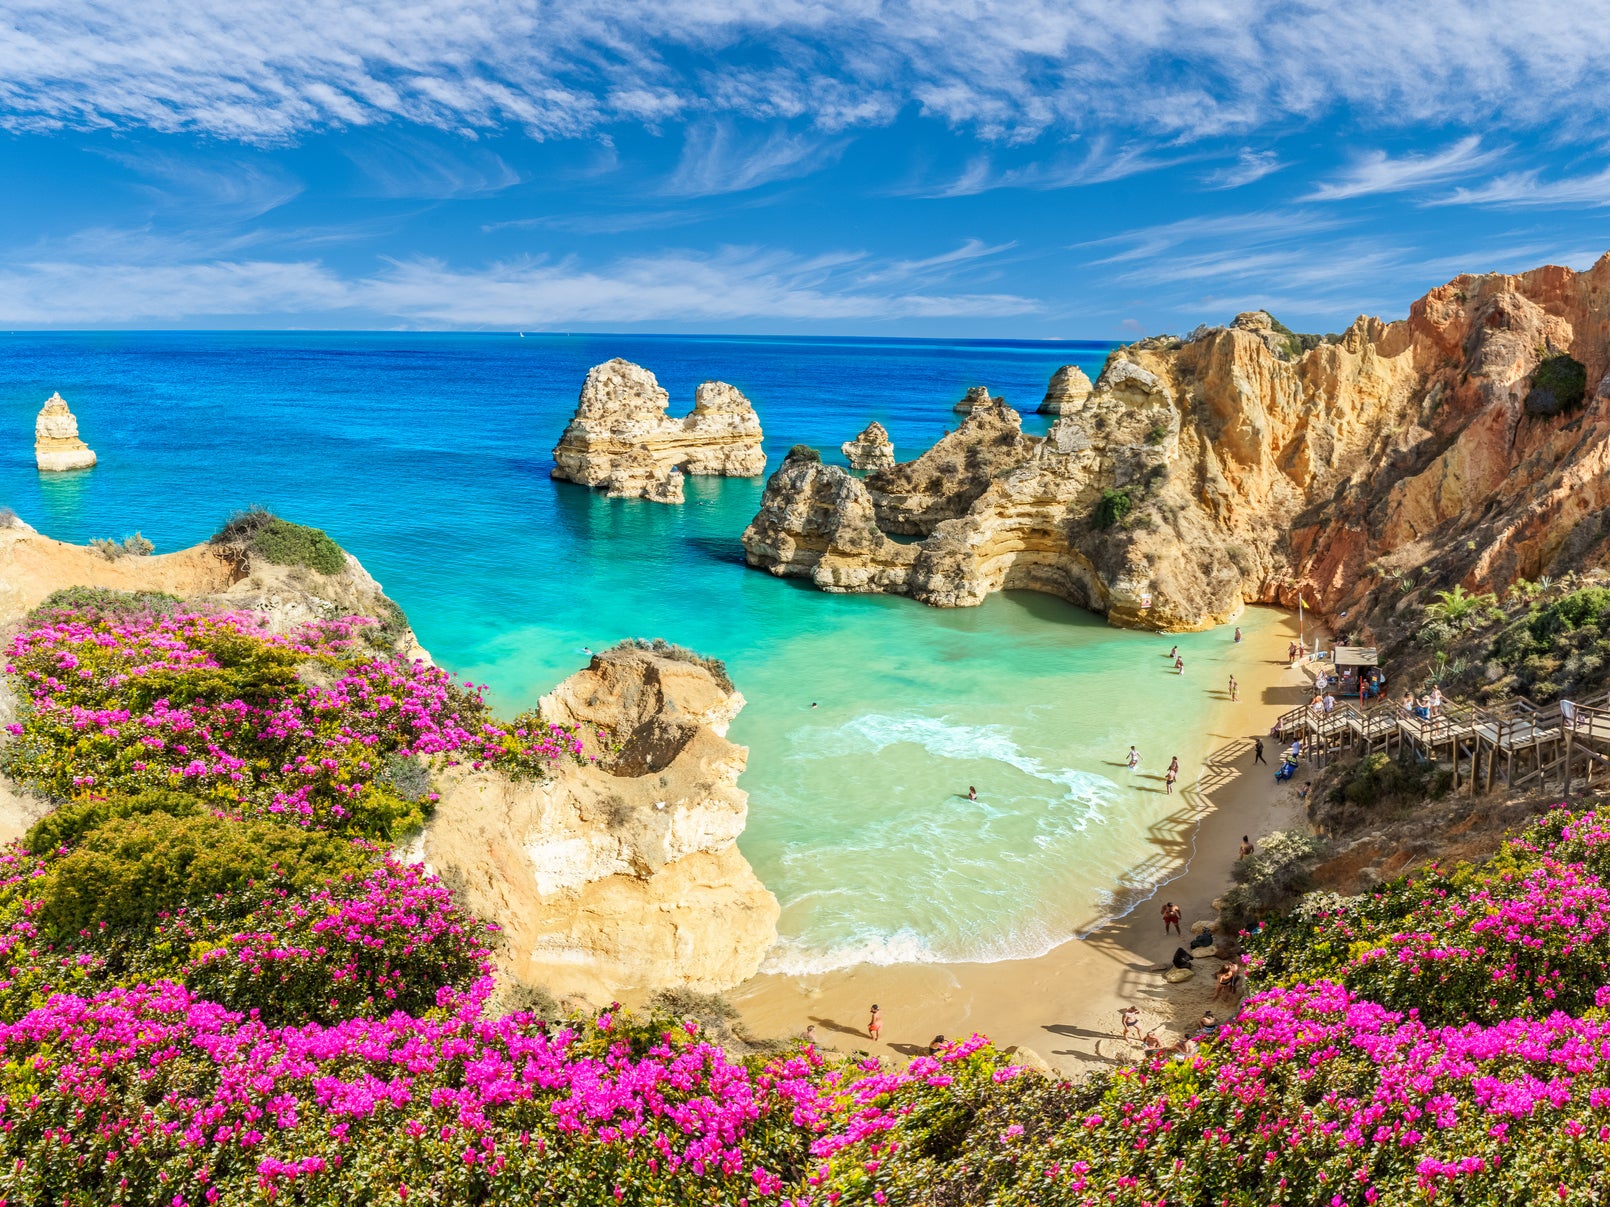 Praia do Camilo beach in Portugal, one of the ‘green list’ destinations